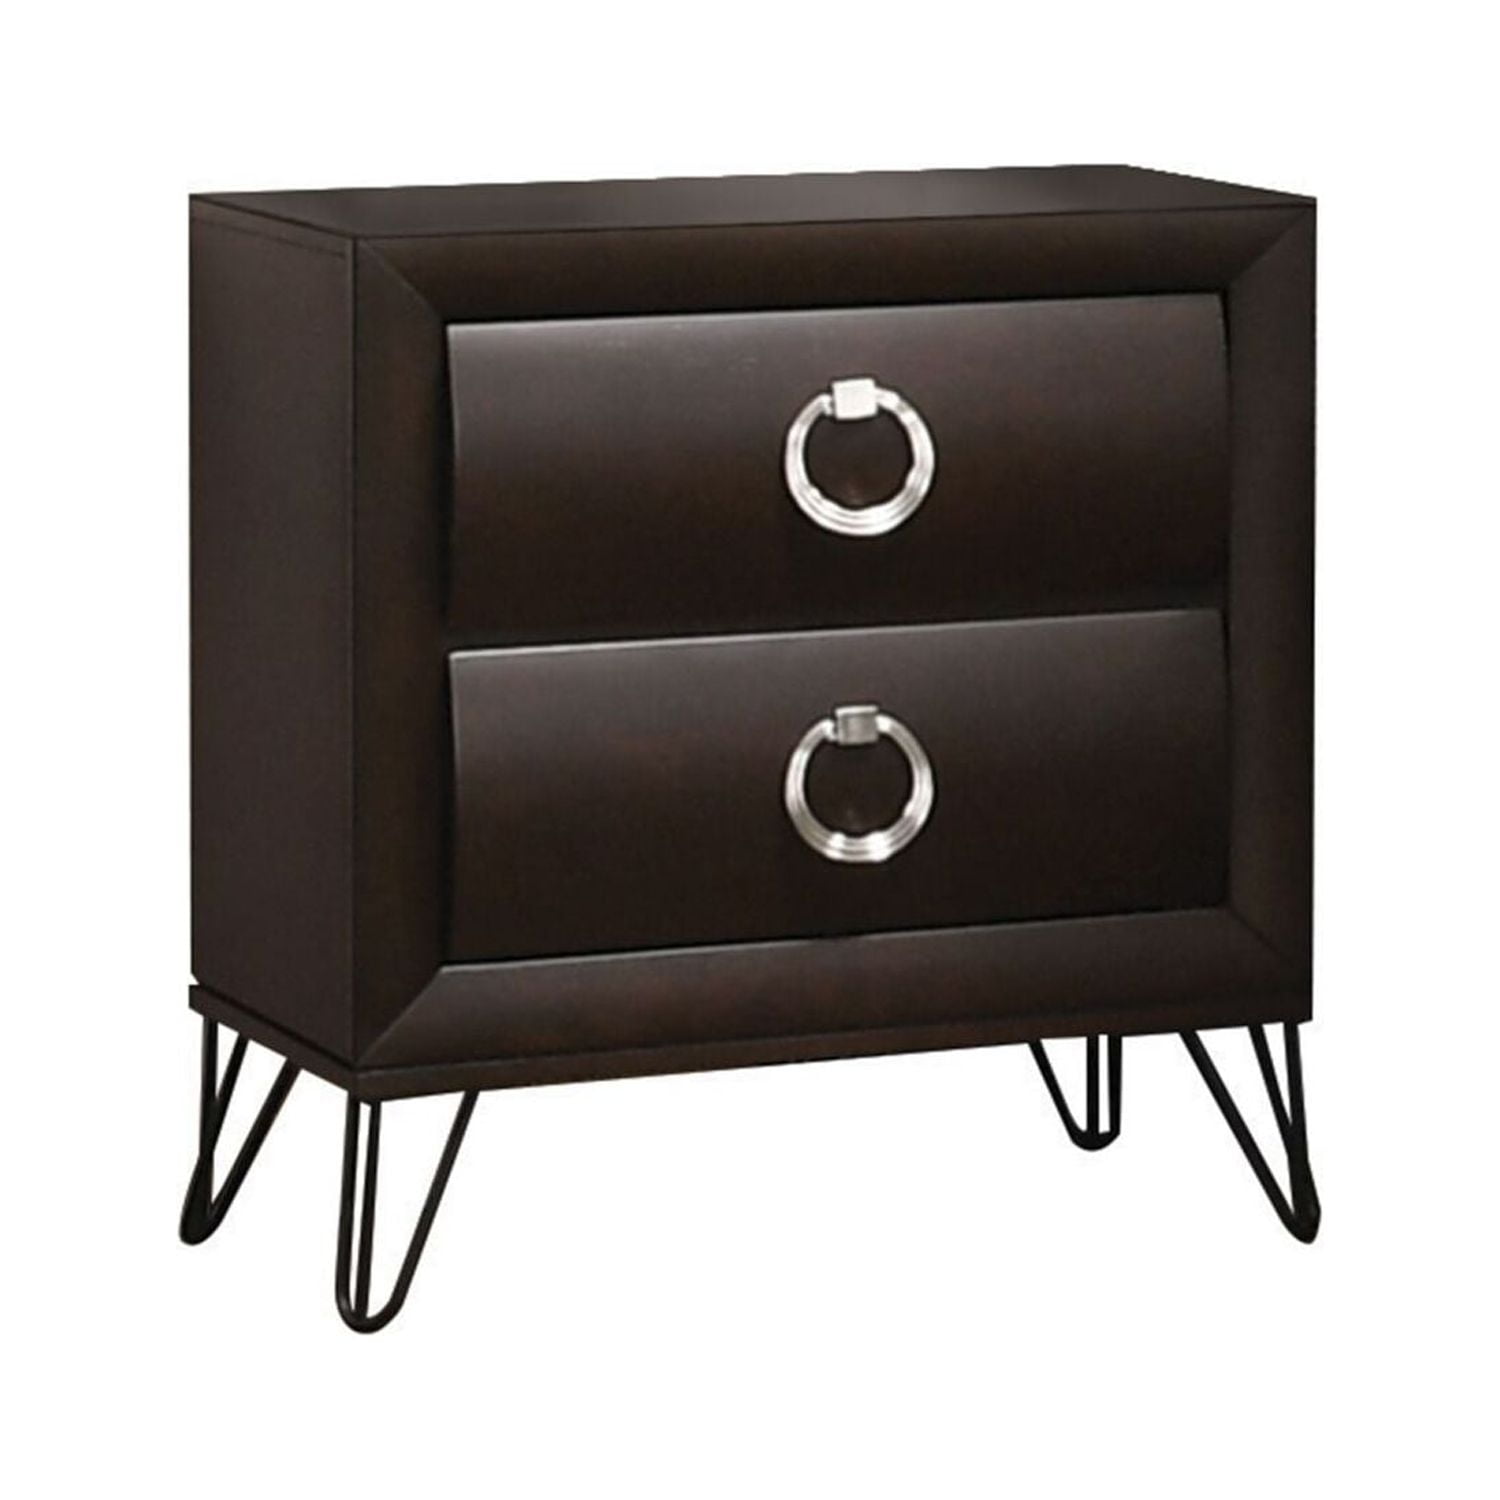 Picture of Acme Furniture 27463 24 x 16 x 27 in. Tablita Nightstand, Dark Merlot